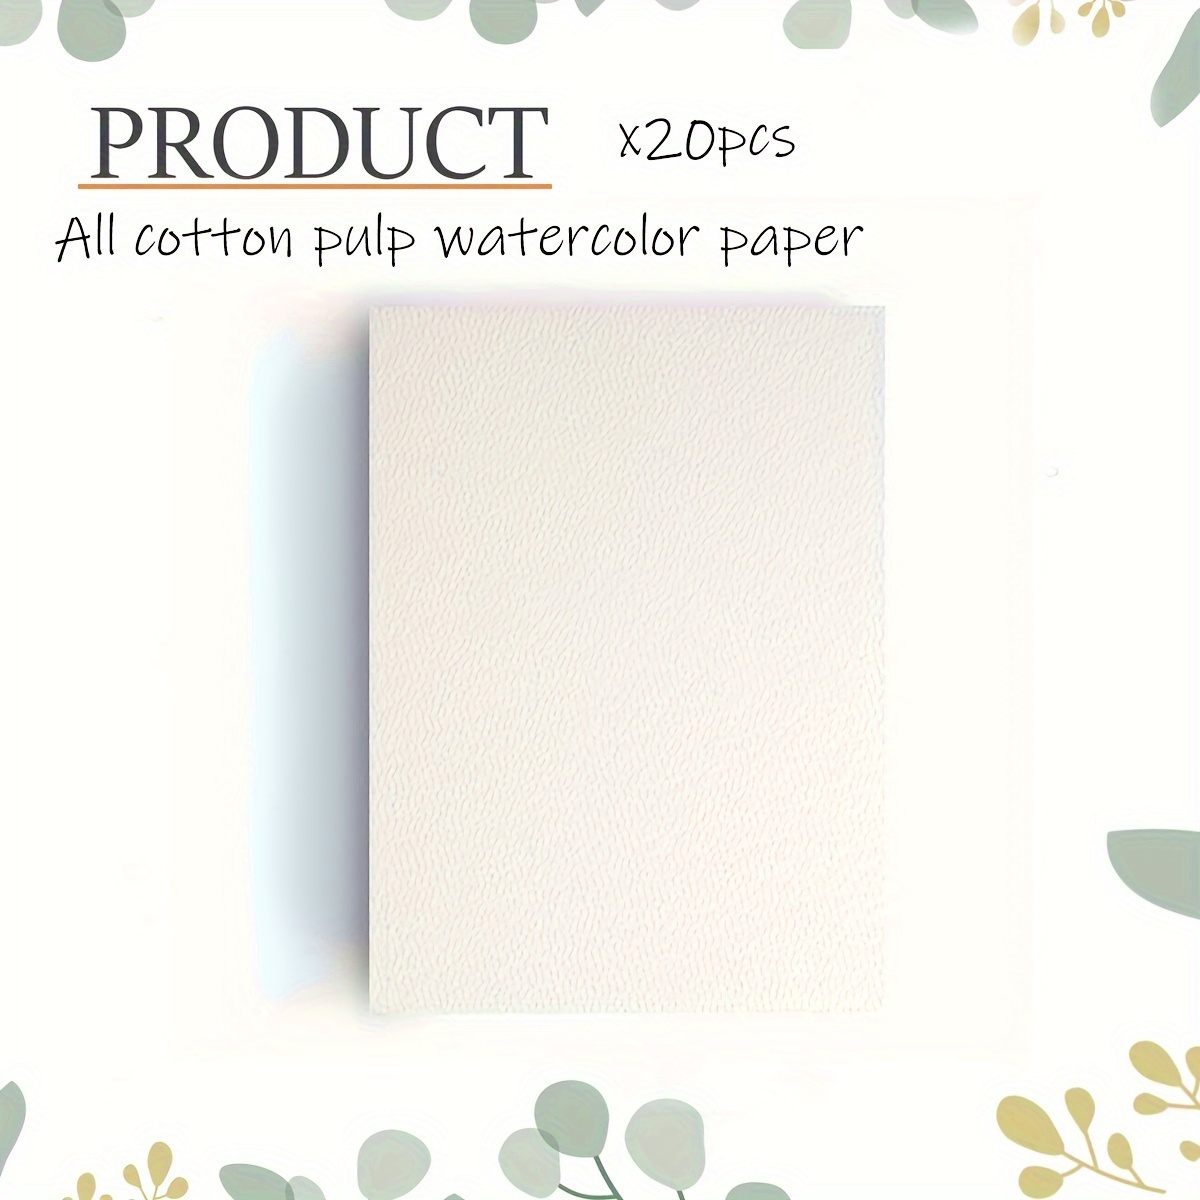 Paper Palette Pads